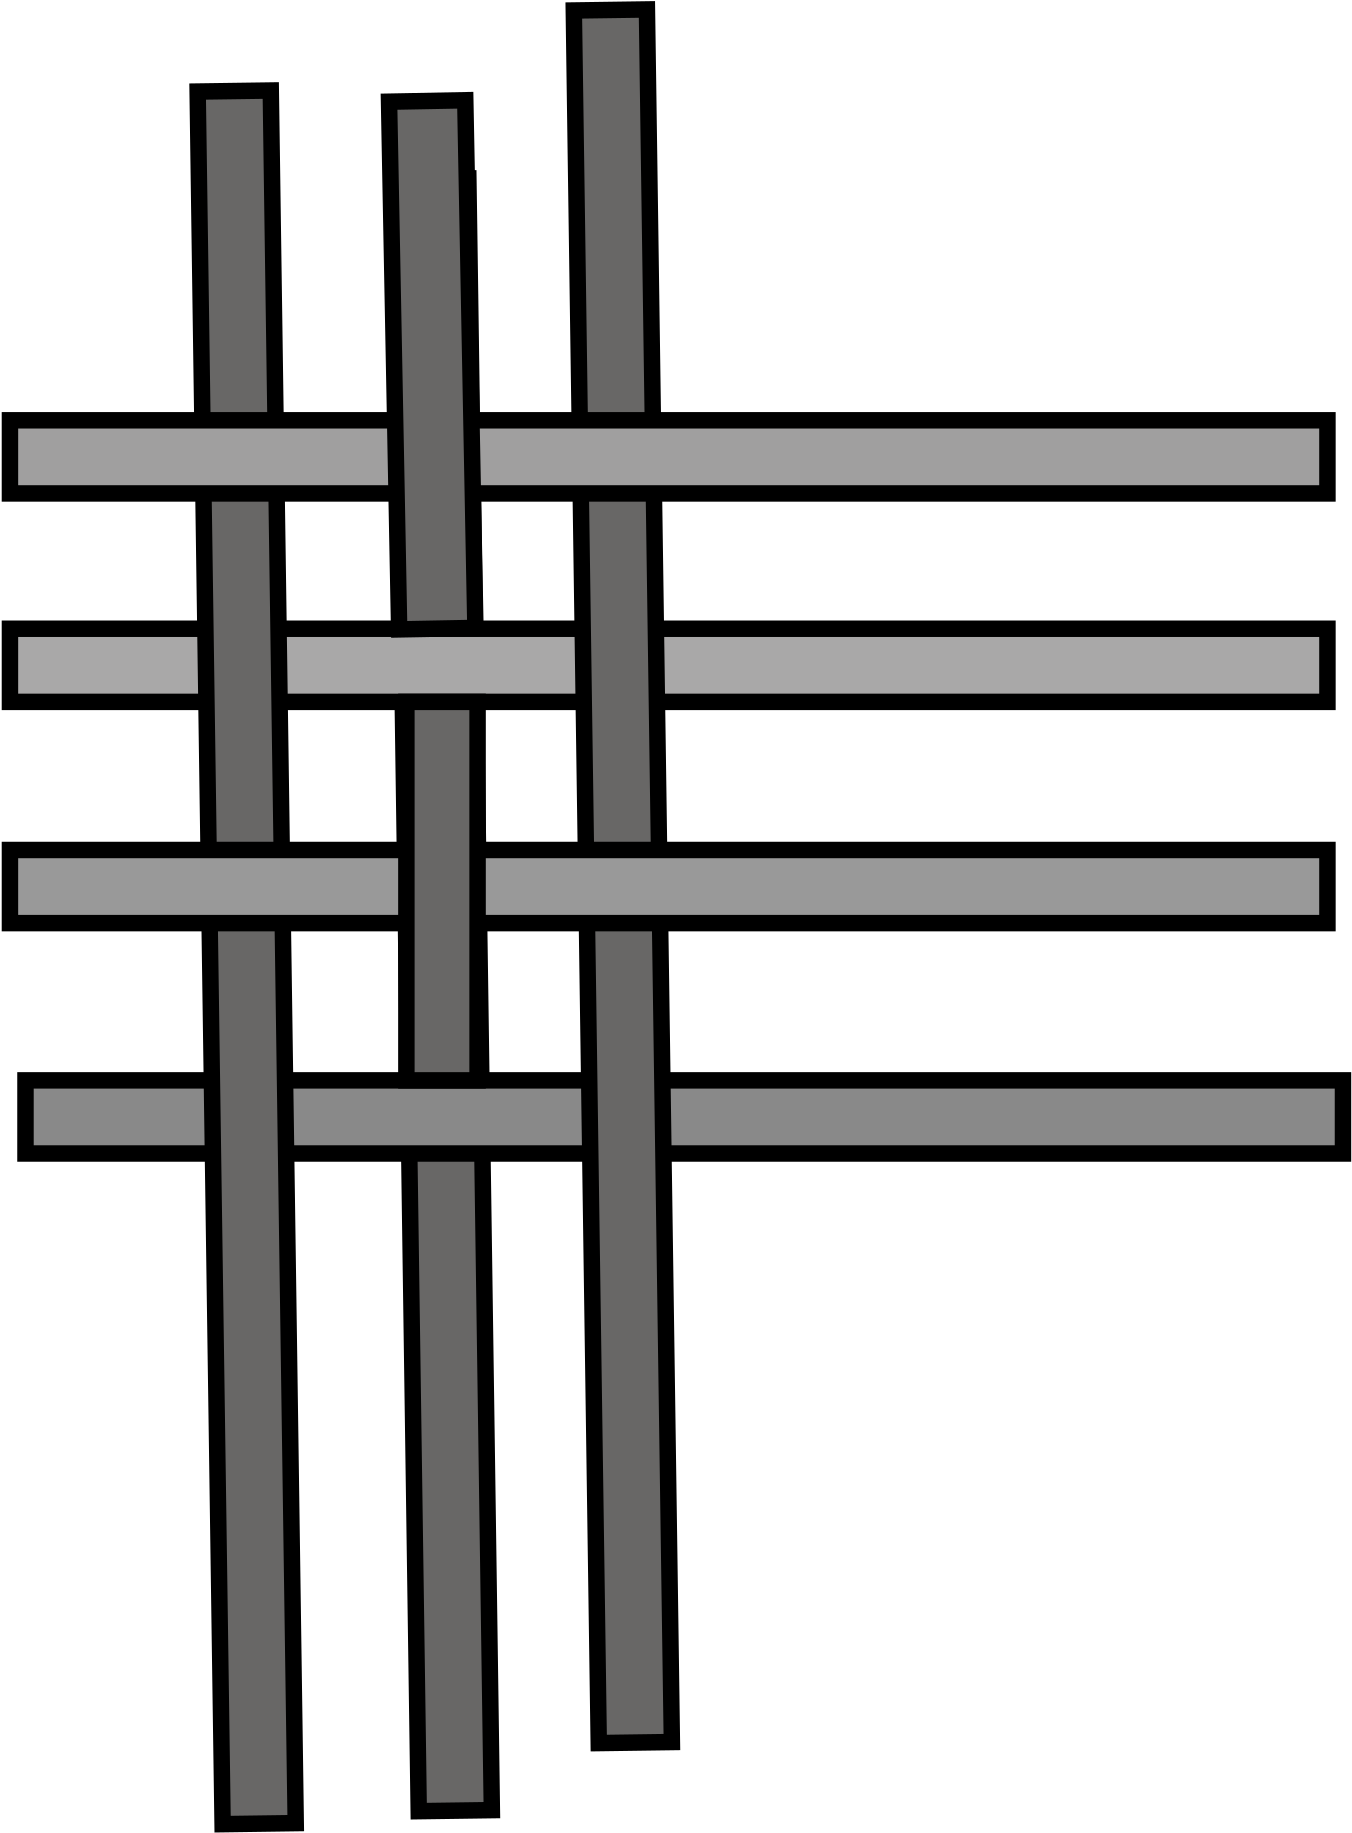 Plain Weave - Wikipedia - Tejido De Ligamento Tafetan (1920x2249)